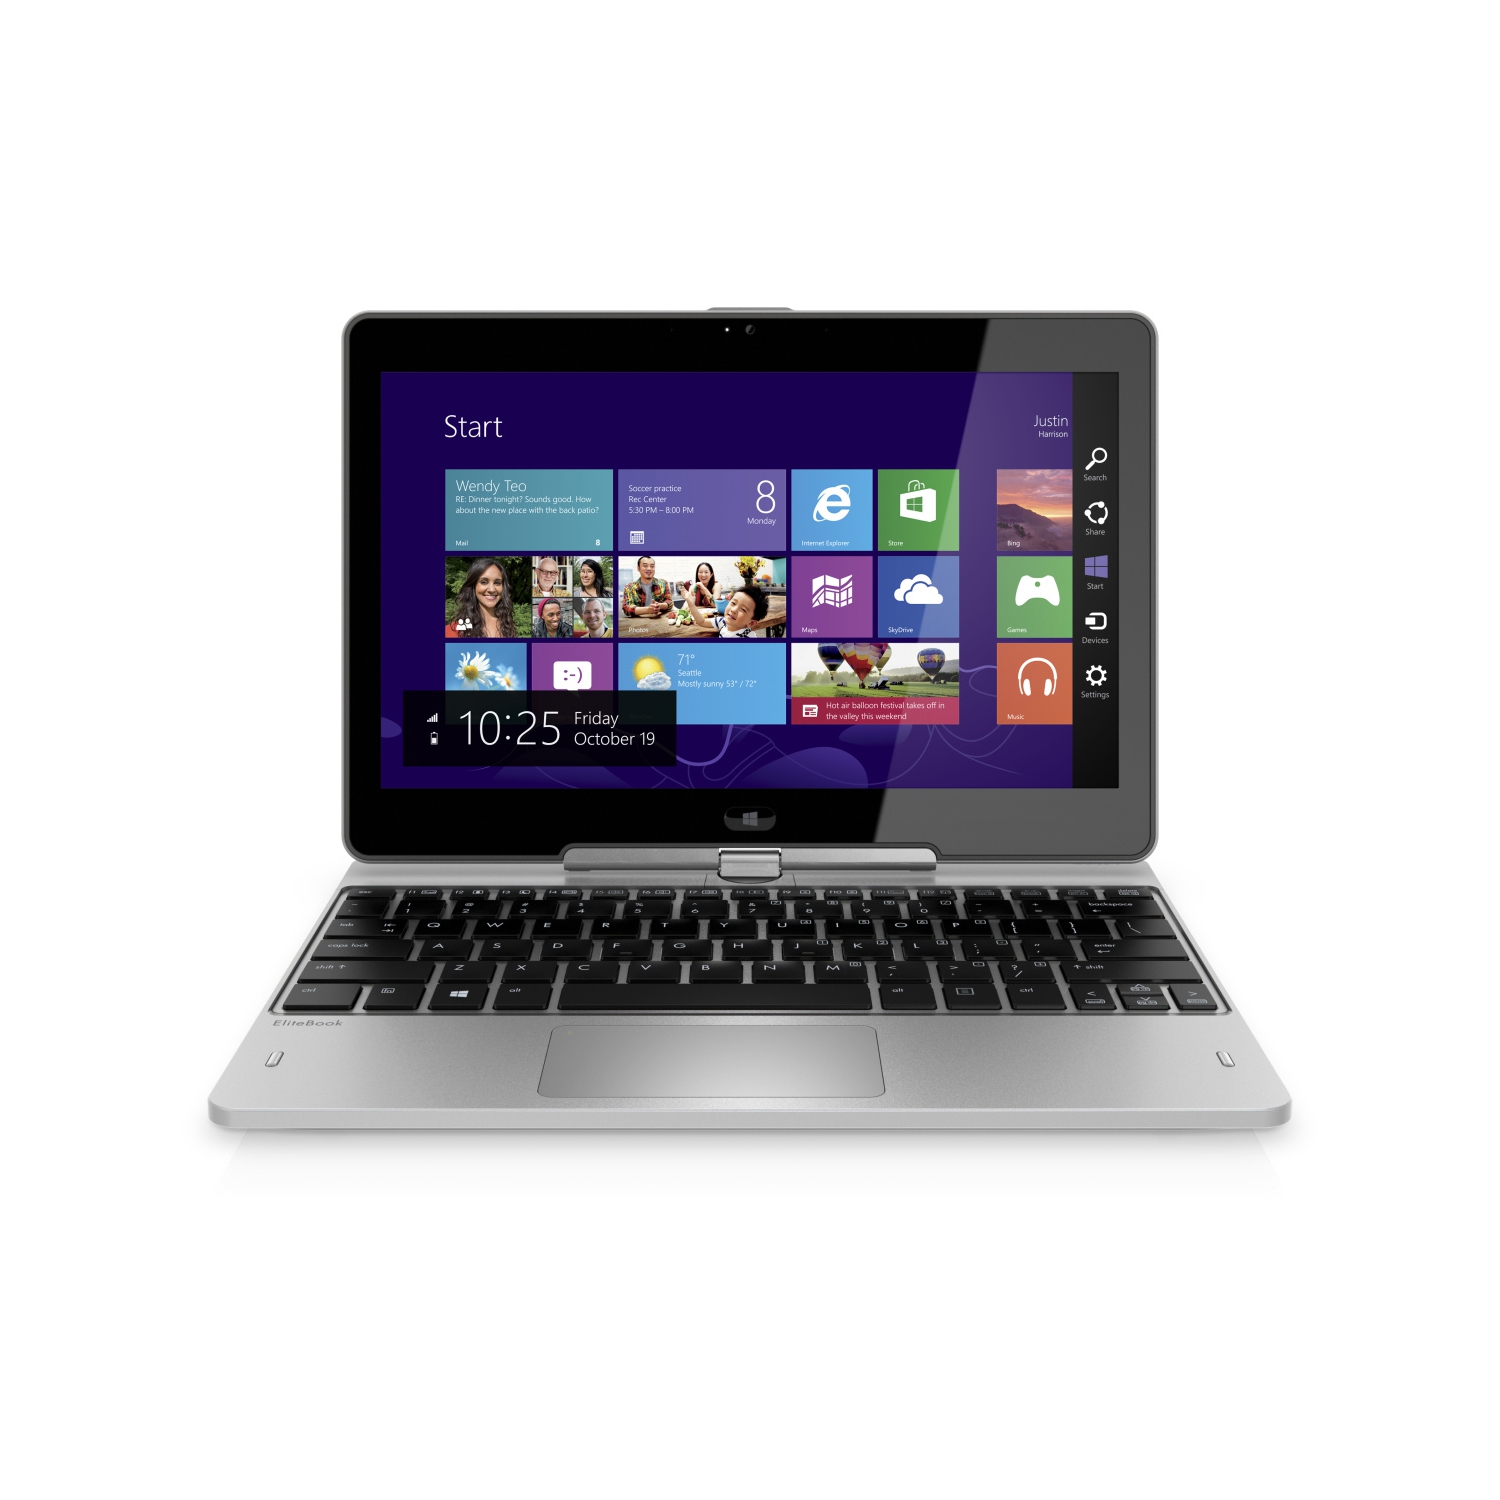 Refurbished (Excellent) - HP EliteBook Revolve 810 G3,11.6" Tablet PC Intel CI7-5600U 2.6G,8G,120G SSD,WIFI,W10H64,1 Year Warranty(EN/FR)